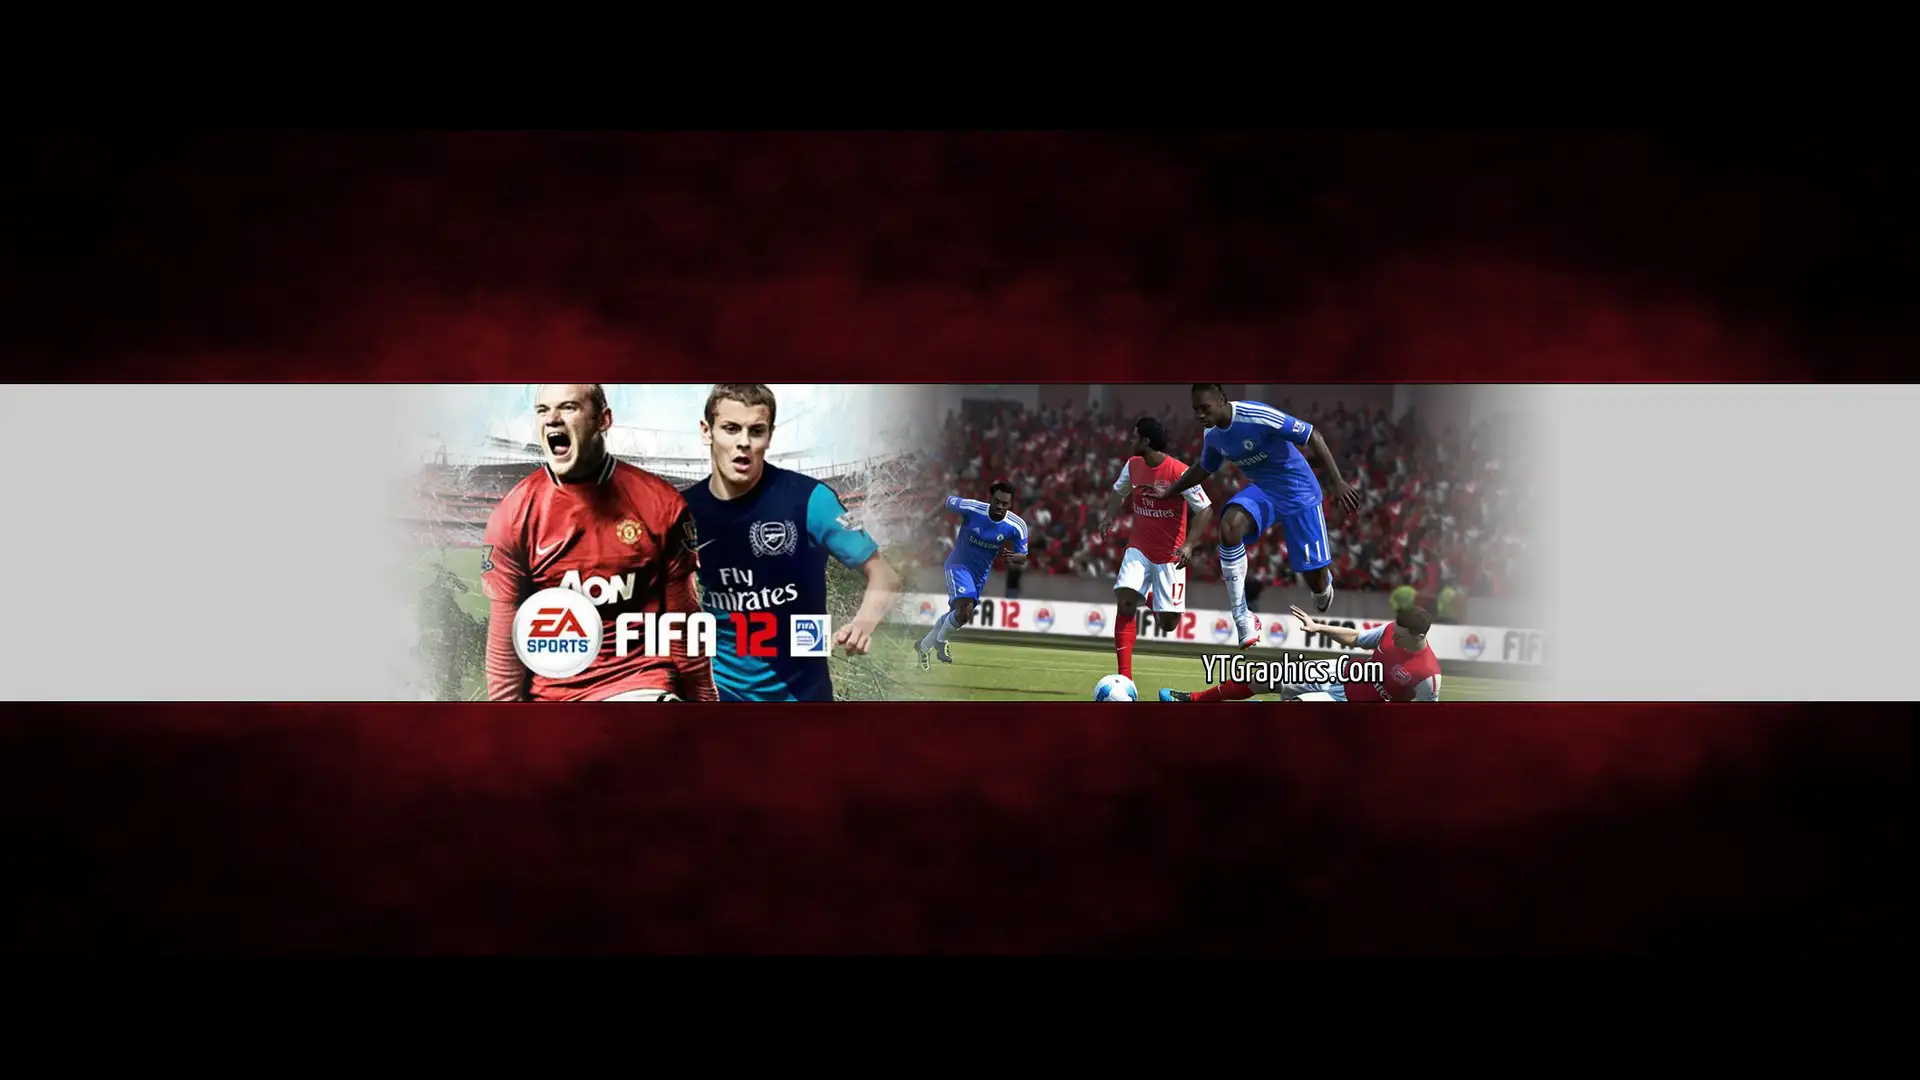 Fifa 2012 Banner